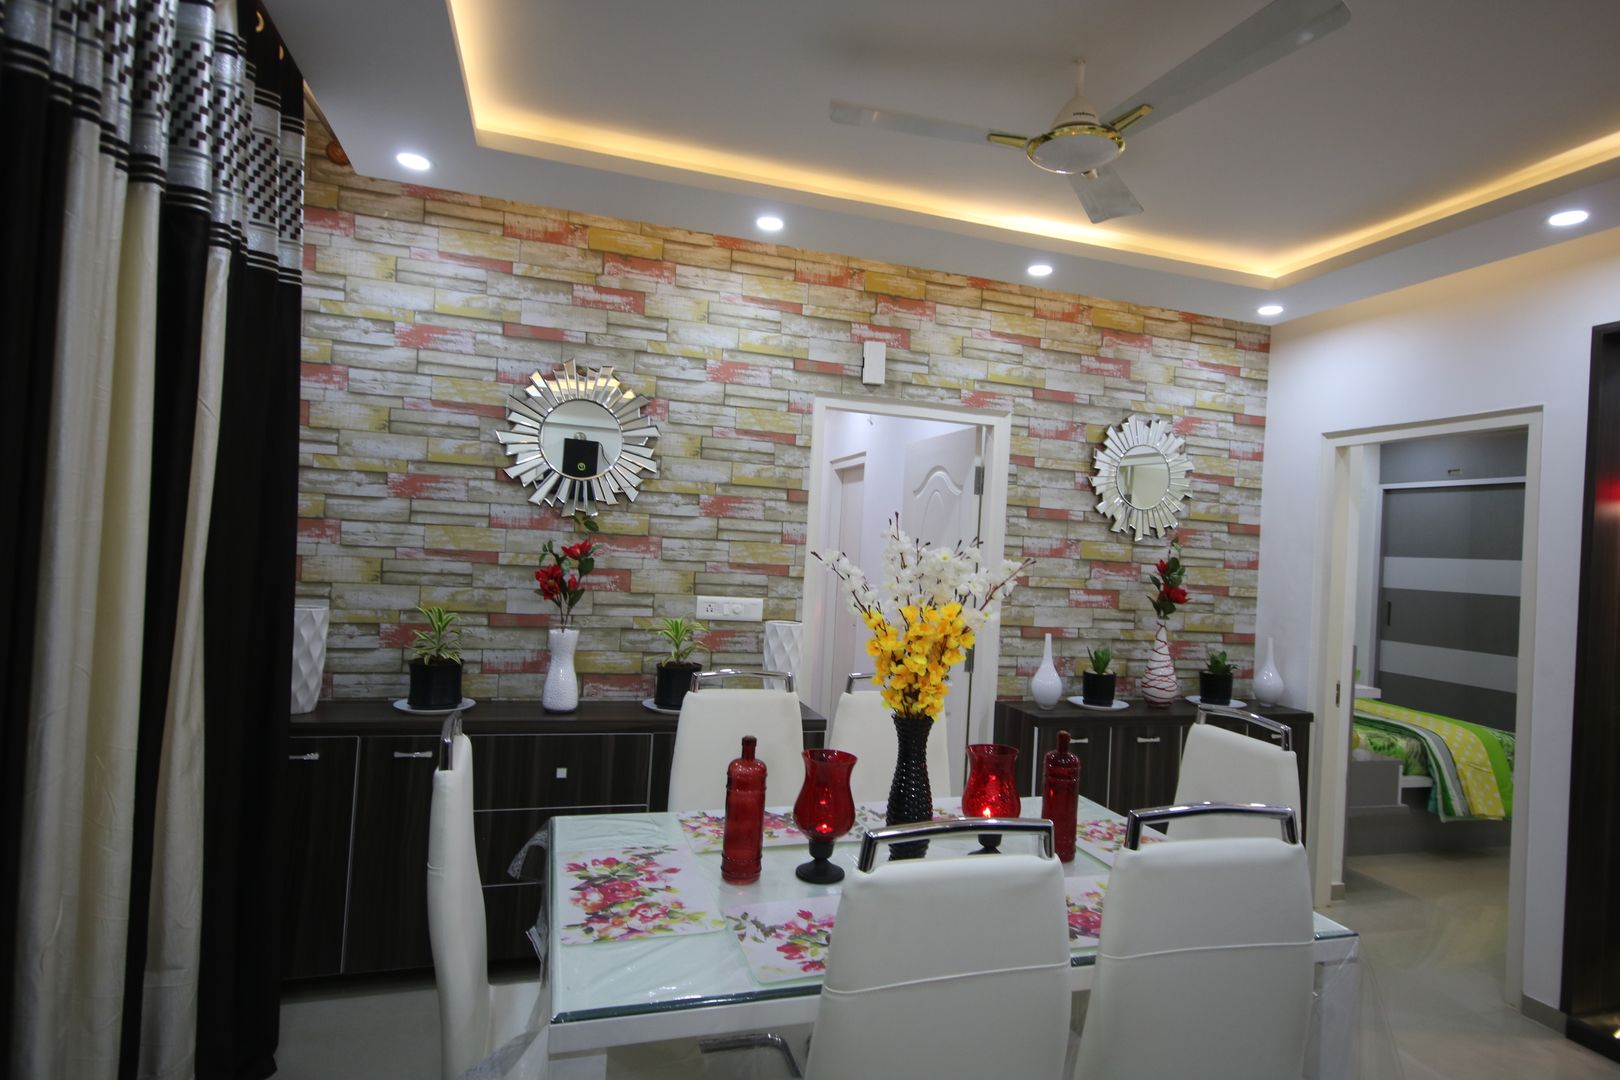 Mr Shiva Nadh Reddy | 2BHK | Bangalore | Full Furnished Home, Enrich Interiors & Decors Enrich Interiors & Decors 아시아스타일 다이닝 룸